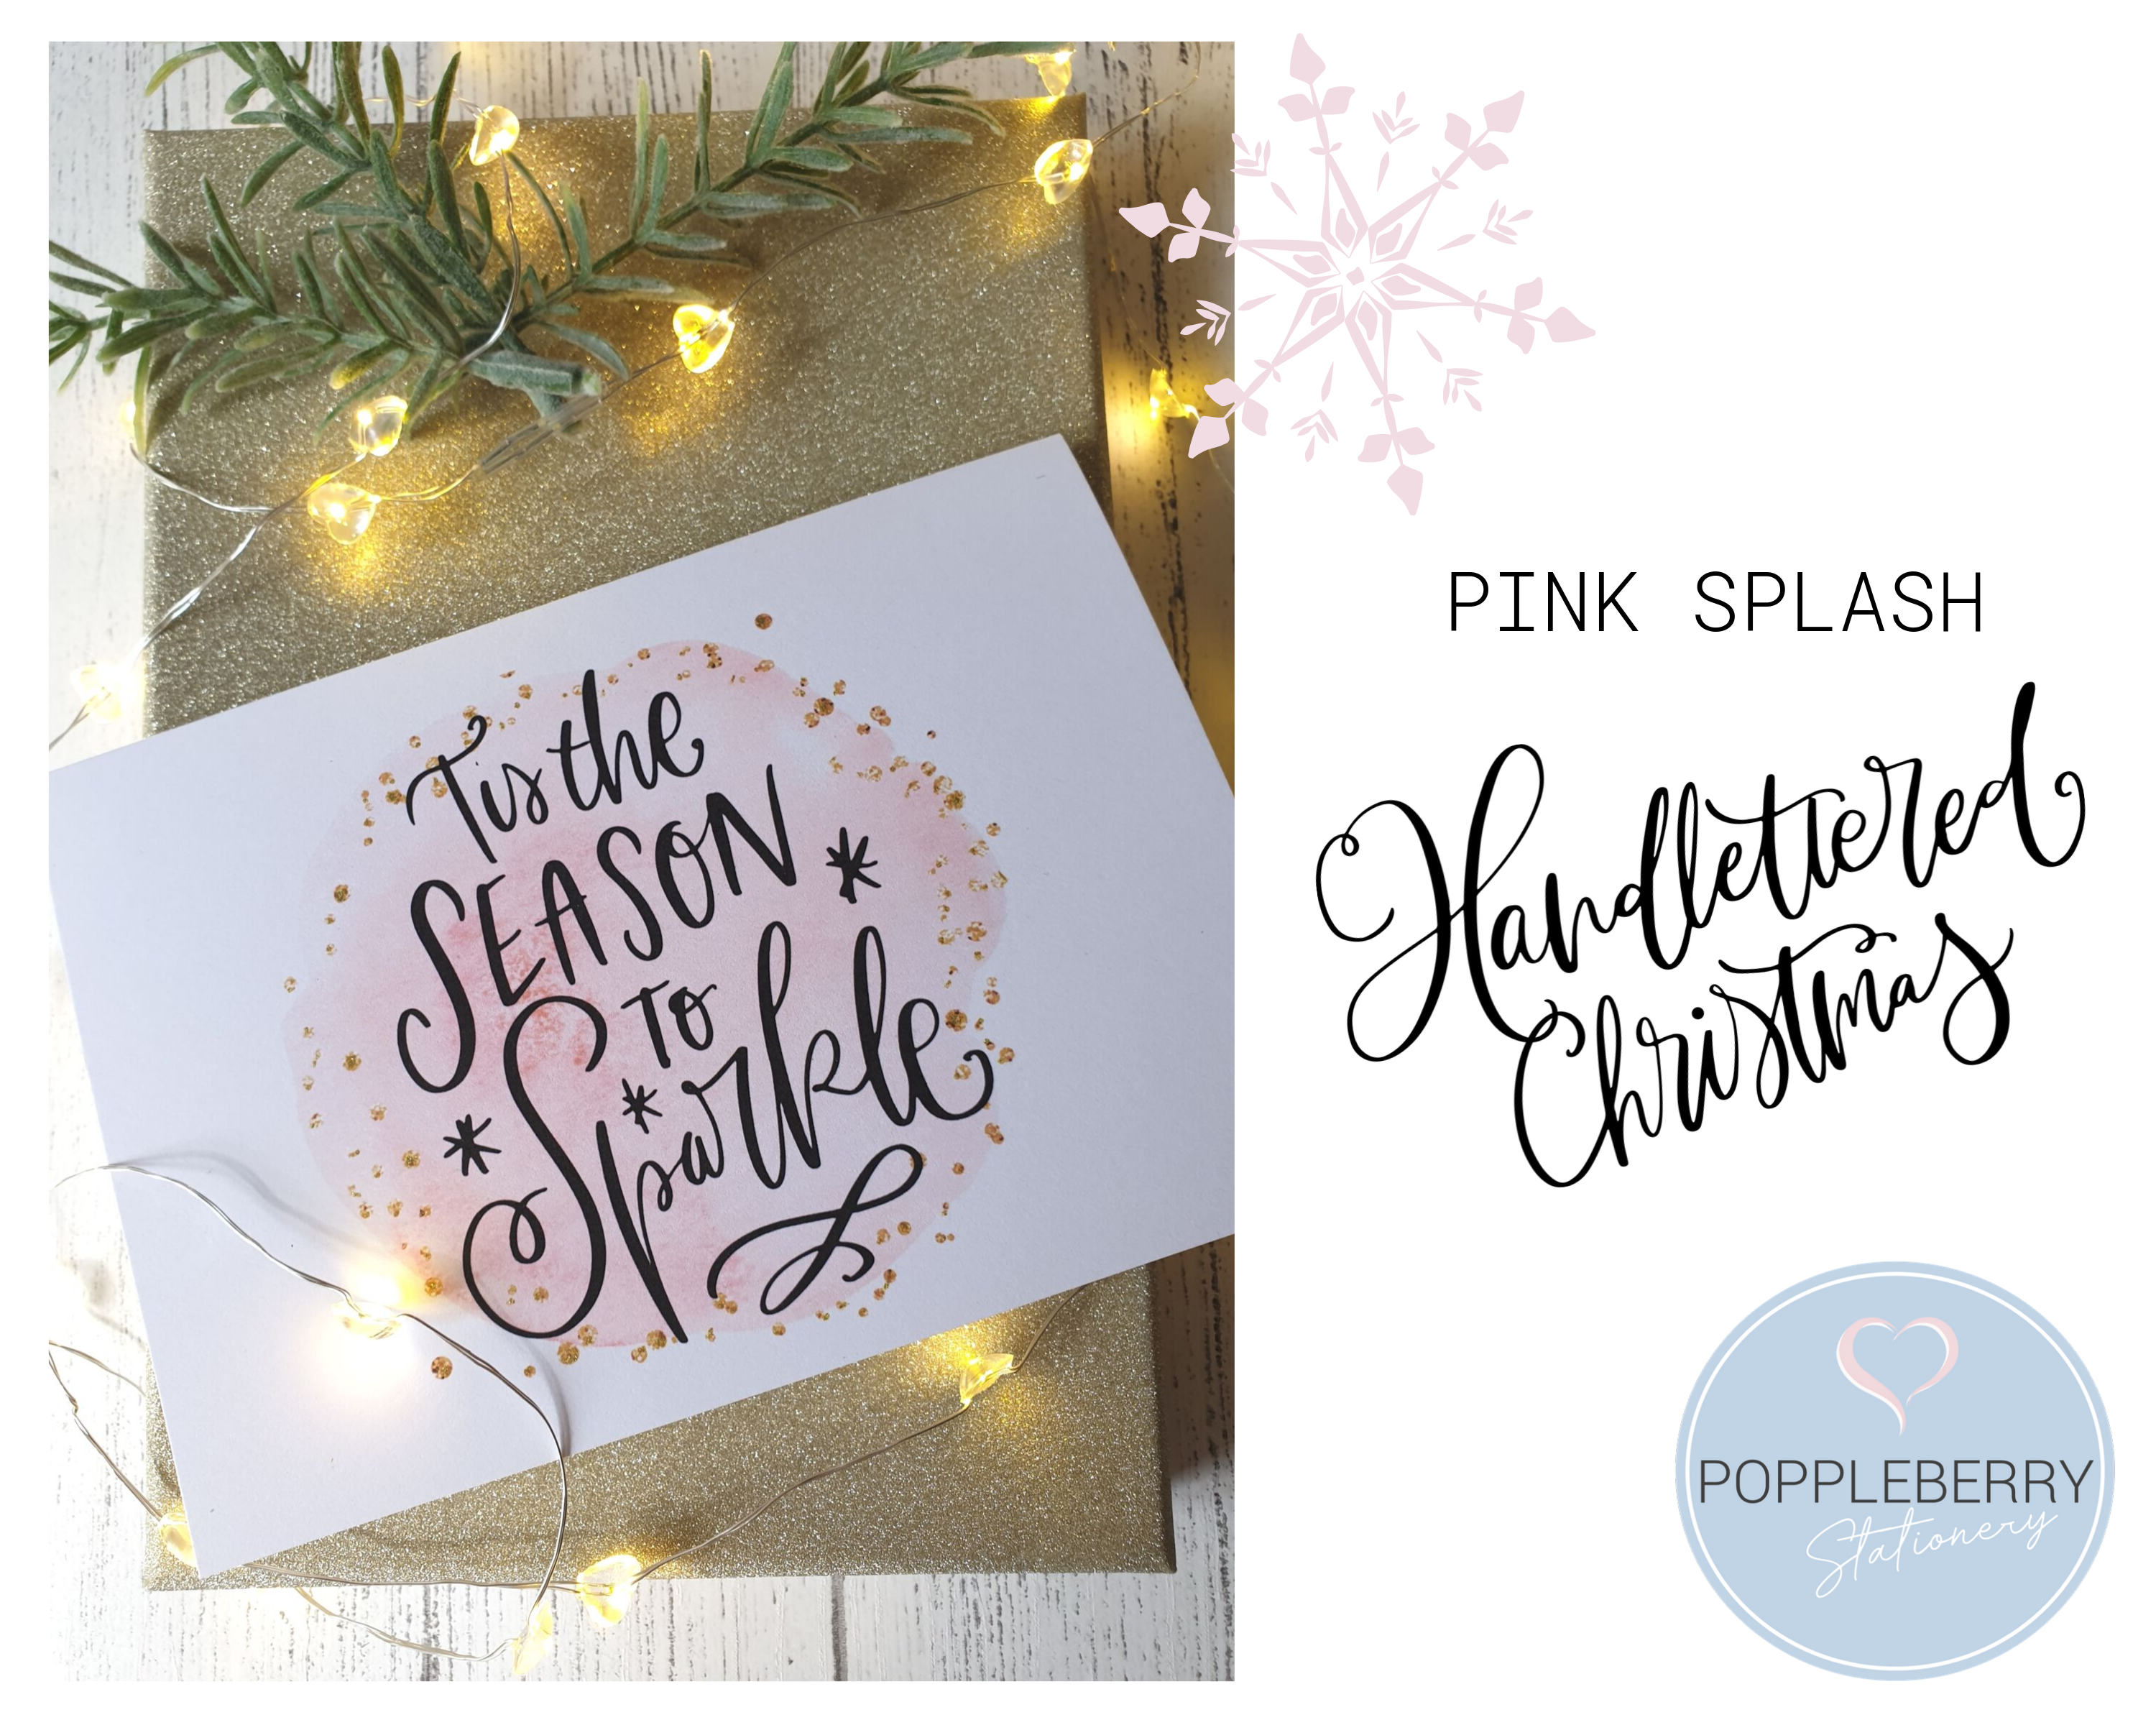 Poppleberry A6 'Tis the Season' Modern Pink Watercolour Splash Christmas Card with Gold Sparkle Glitter.